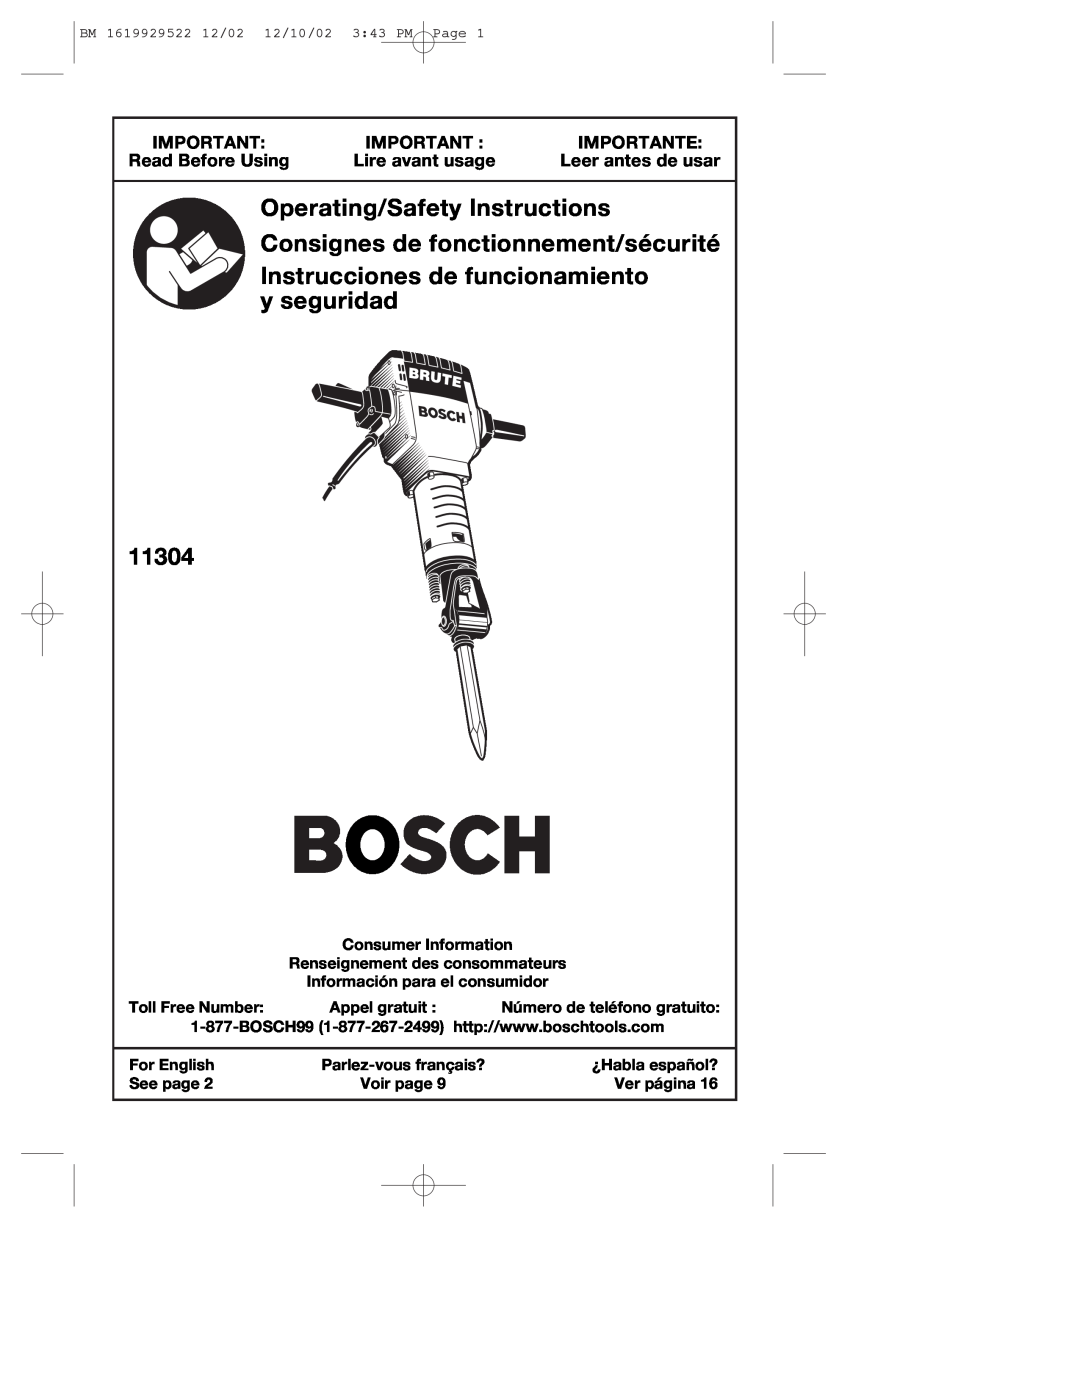 Bosch Power Tools 11304KD manual Importante, Read Before Using, Lire avant usage, Leer antes de usar 